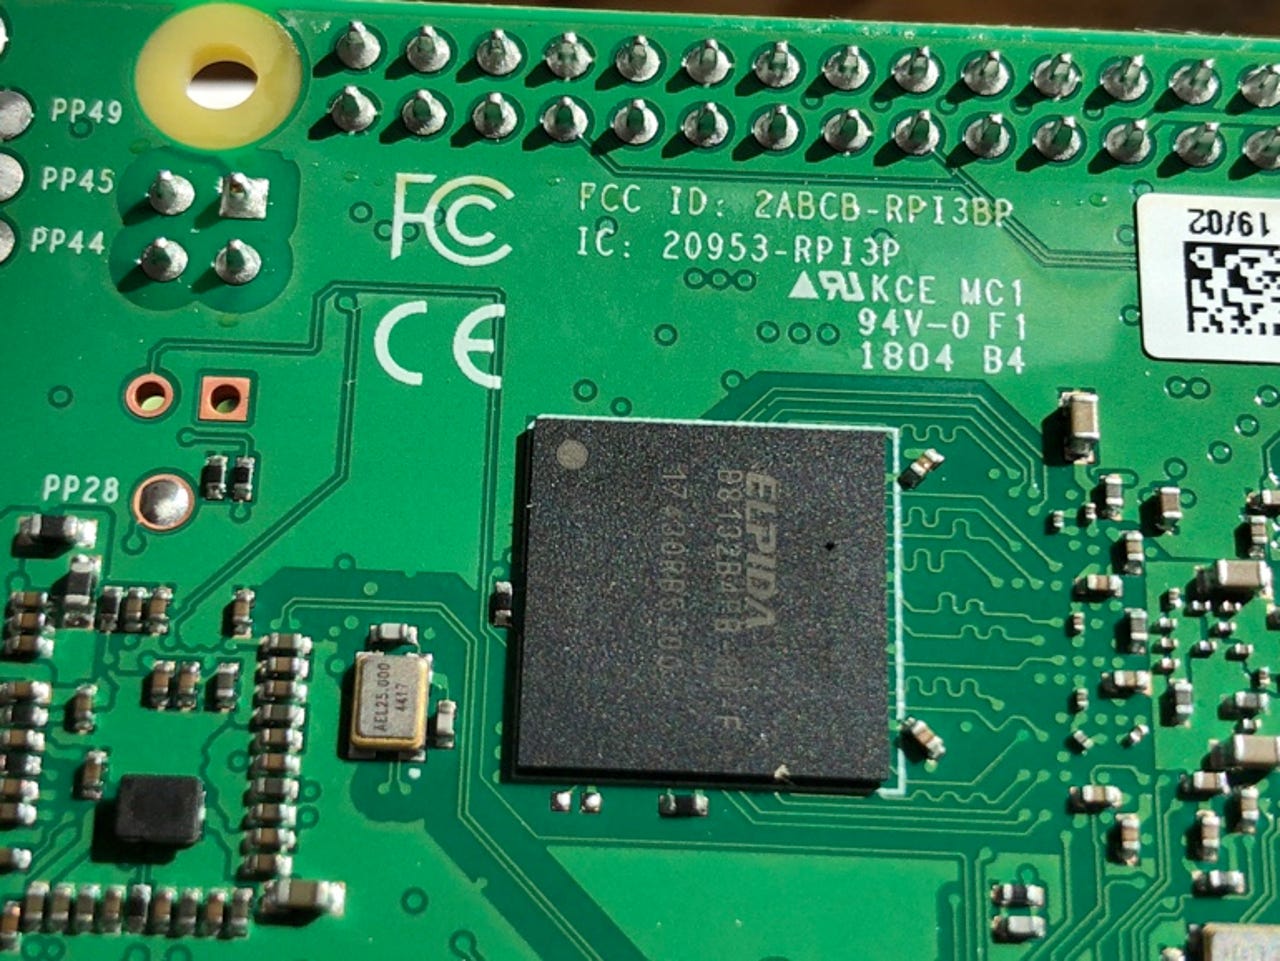 Closeup of the RAM chip